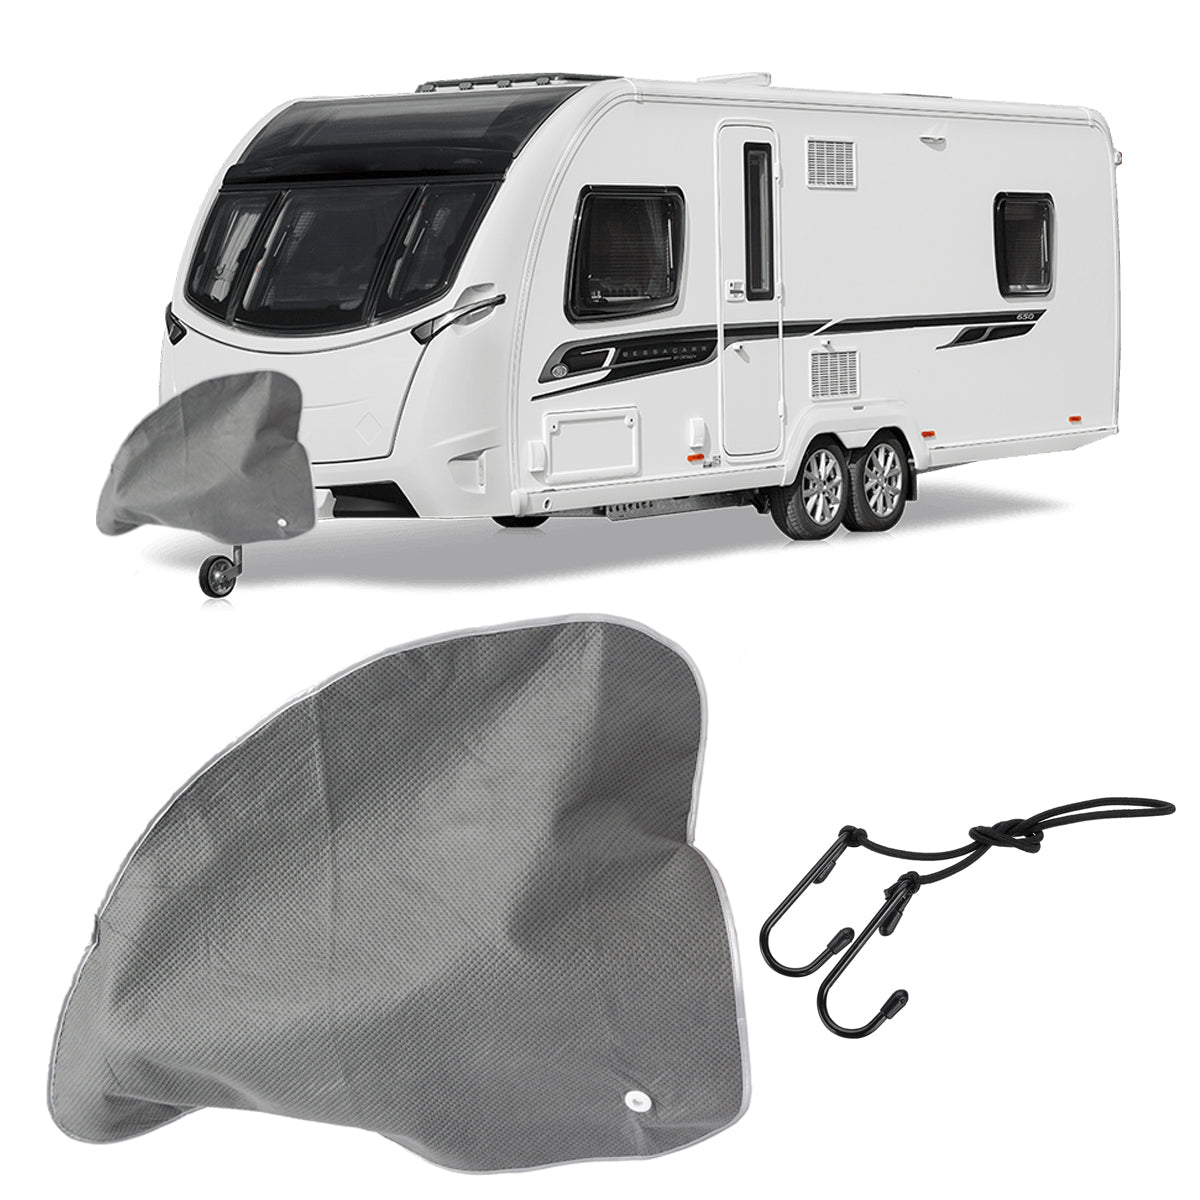 Lavender 83X63cm Towing Hitch Coupling Lock Cover Waterproof Protector Grey for Caravan Trailer Car